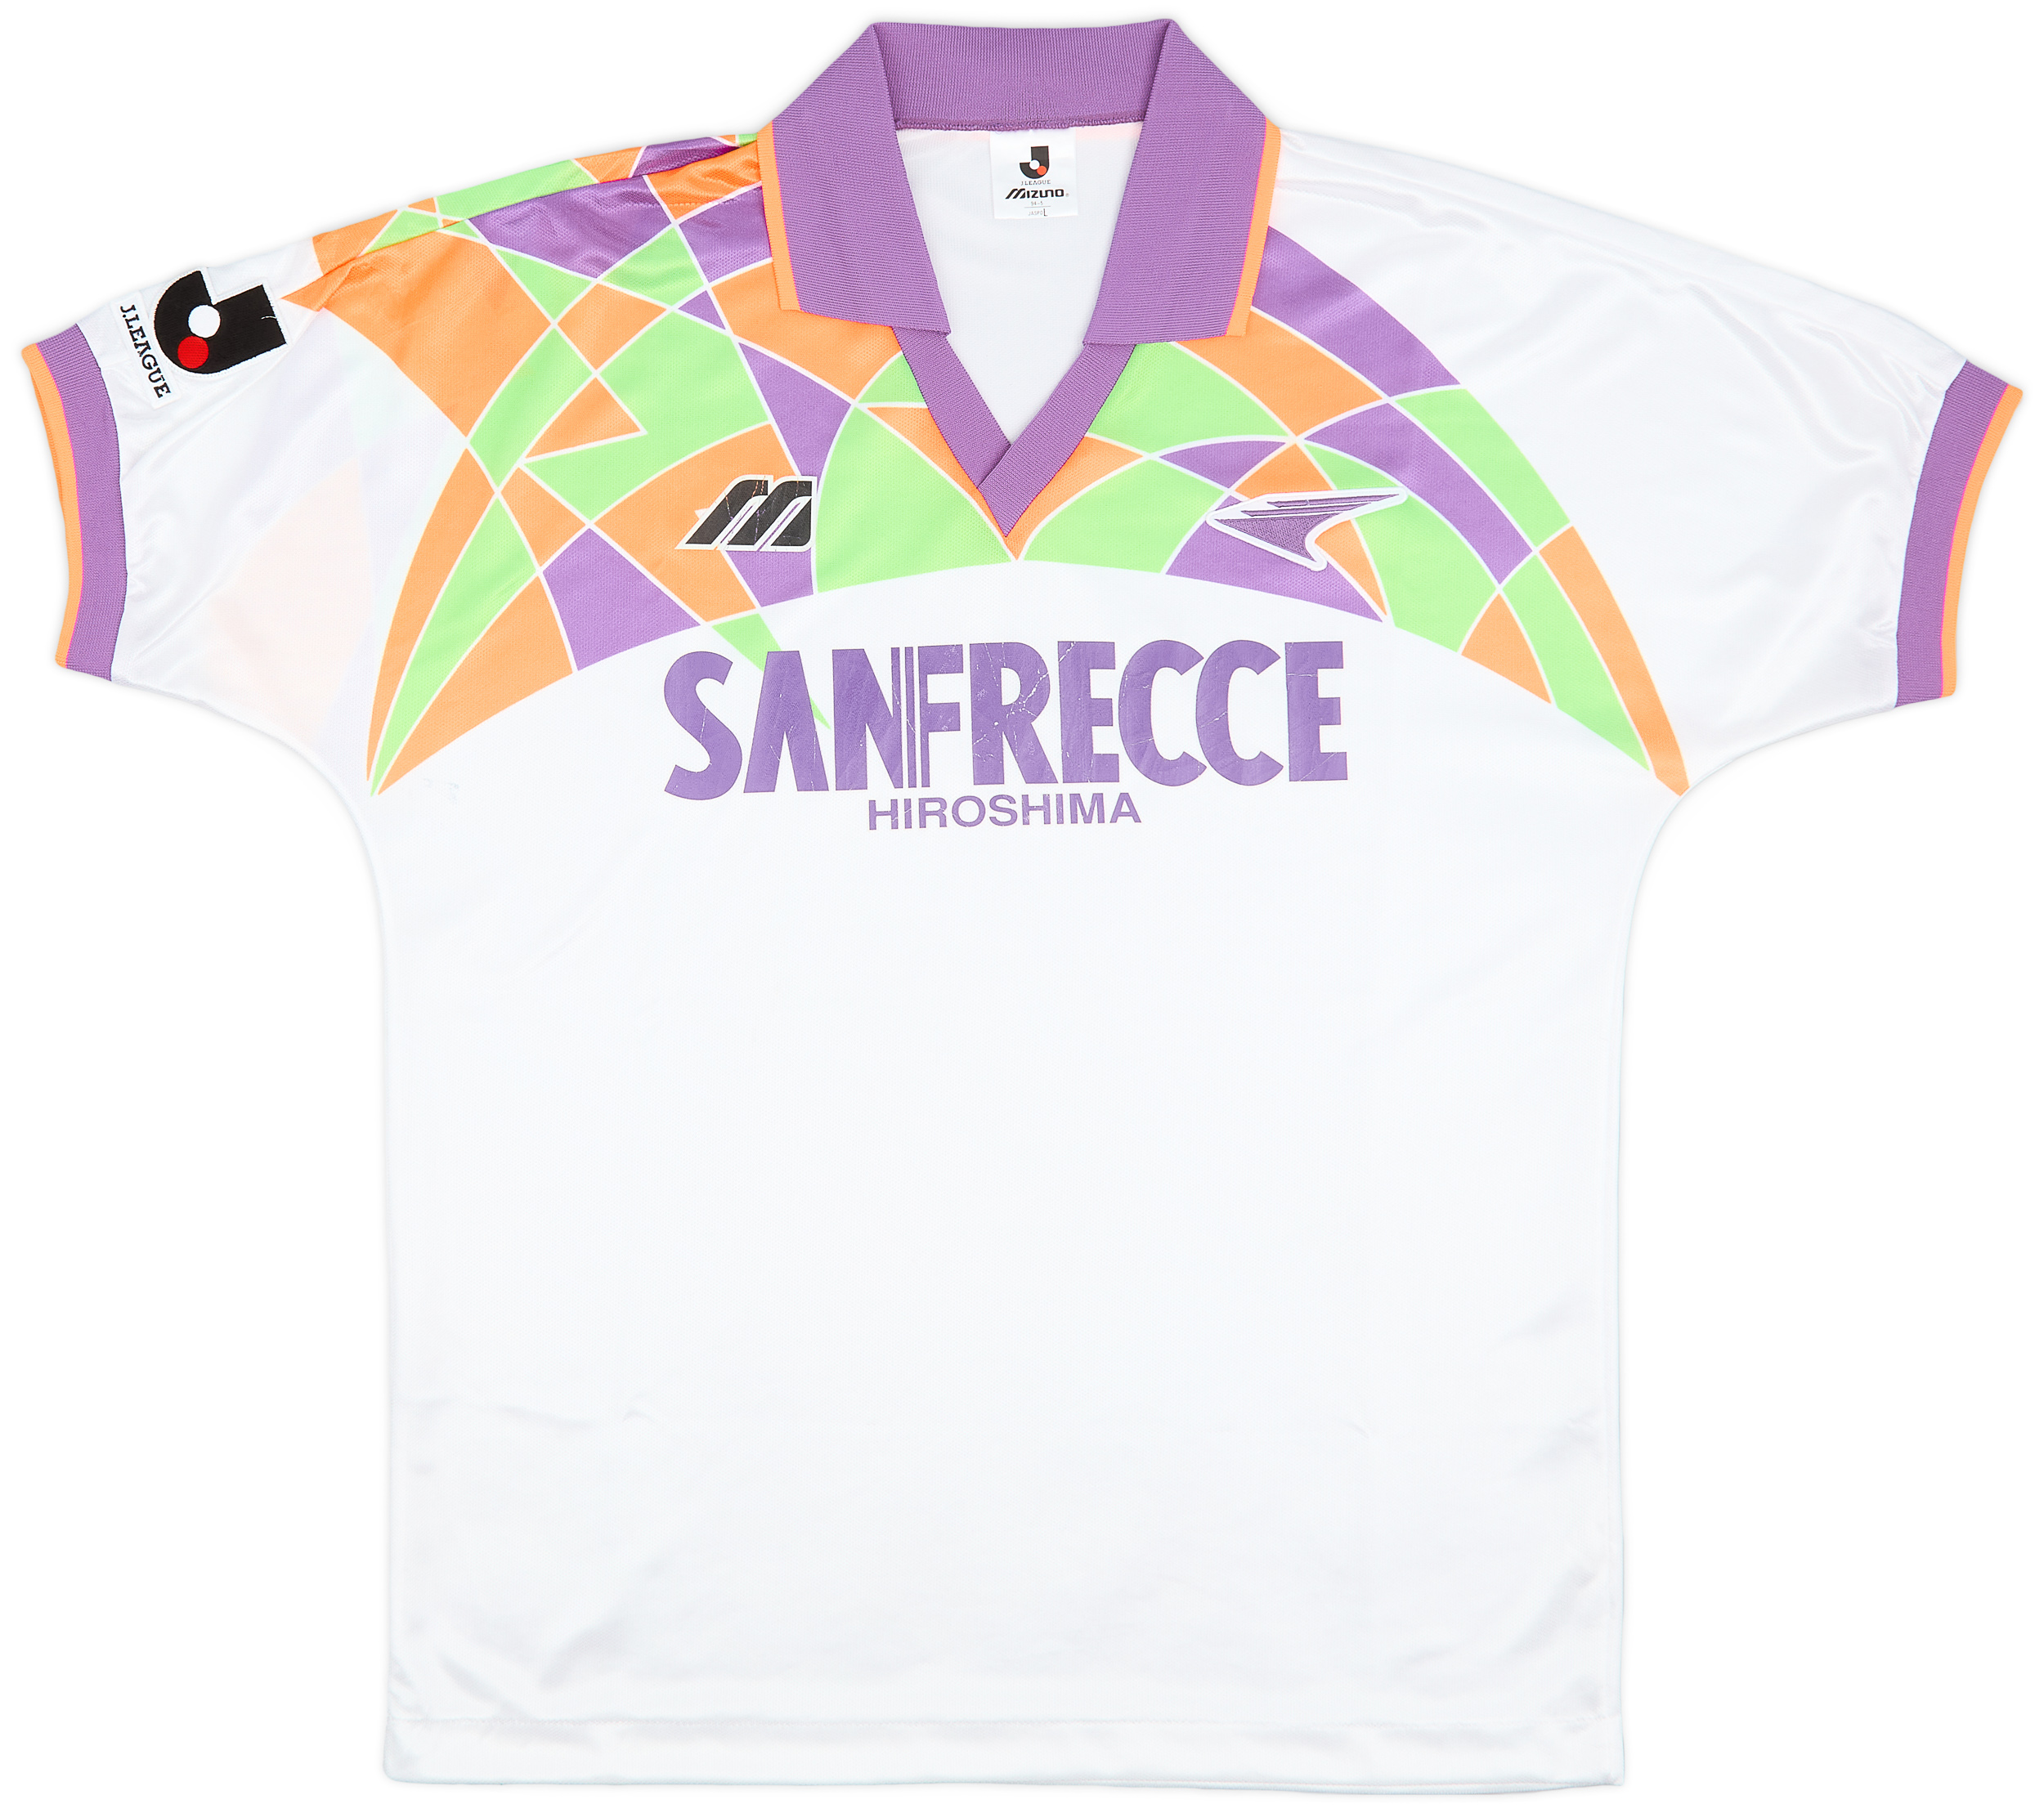 Retro Sanfrecce Hiroshima Shirt